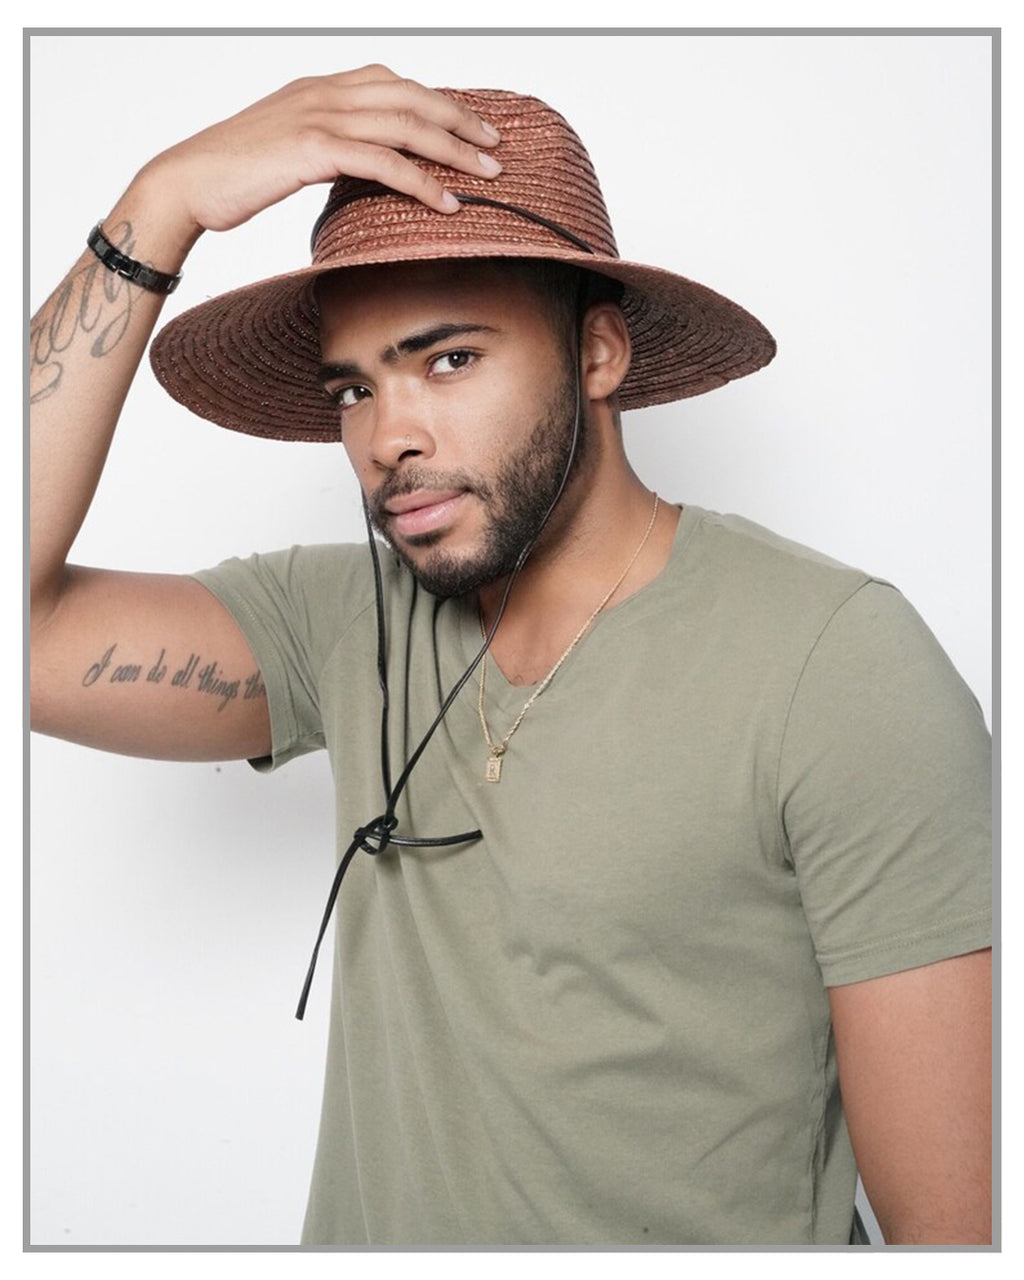 The Vista Chocolate Straw Hat